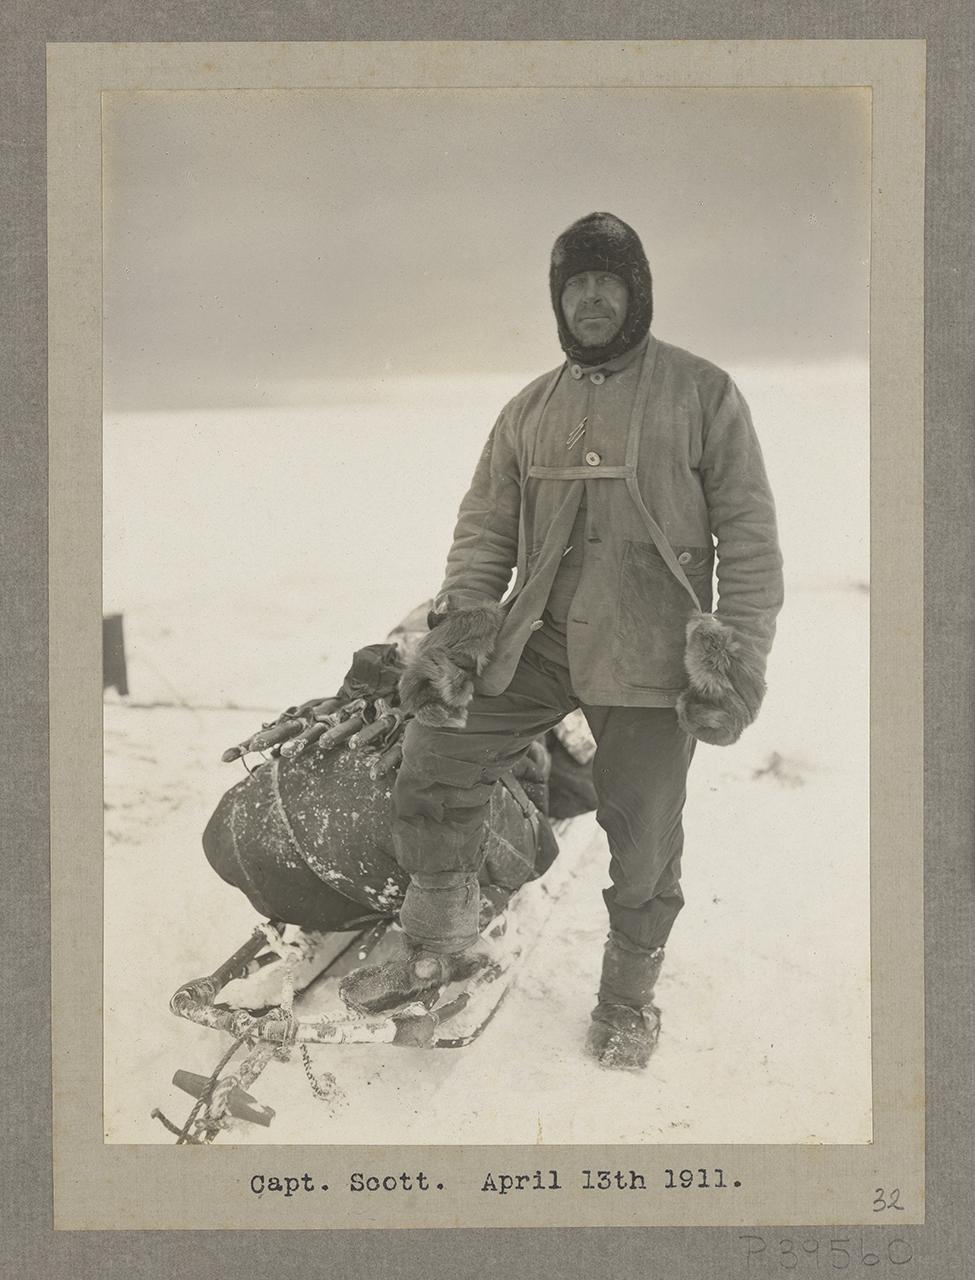 Image of Robert Falcon Scott in polar territory wearing heavy polar gear, leaning on a sled